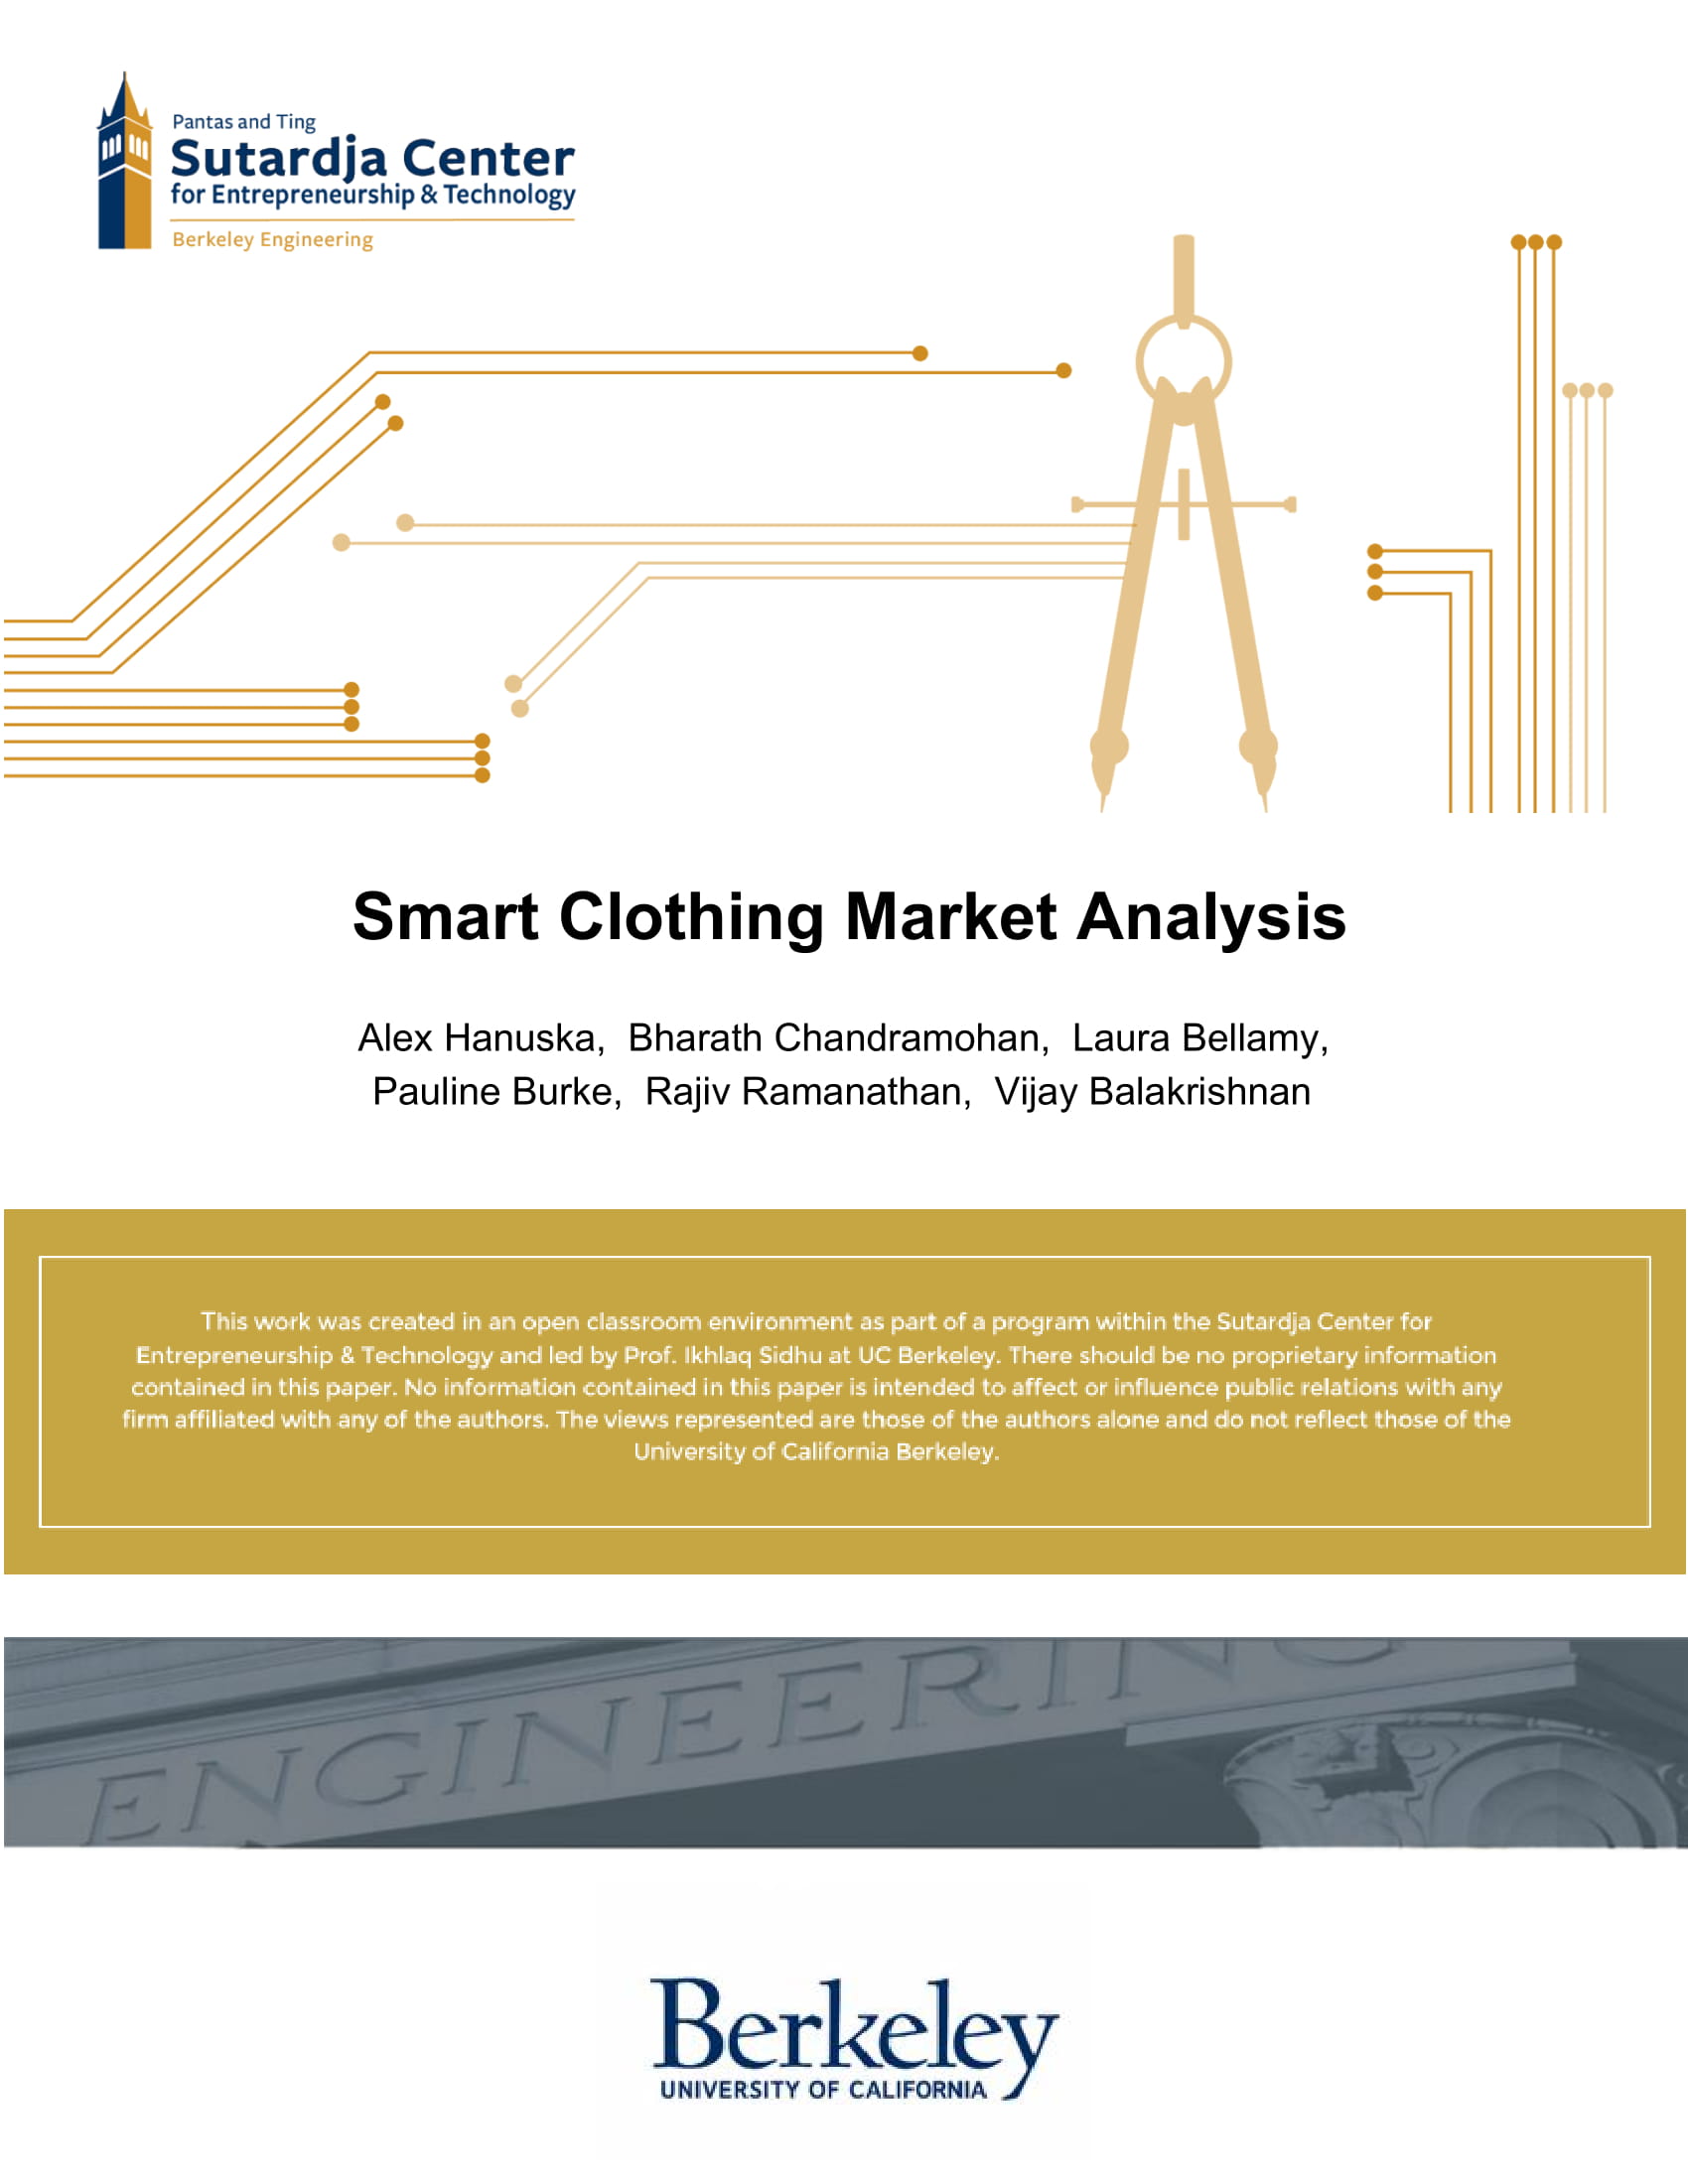 Smart Clothing Market Analysis Report 01